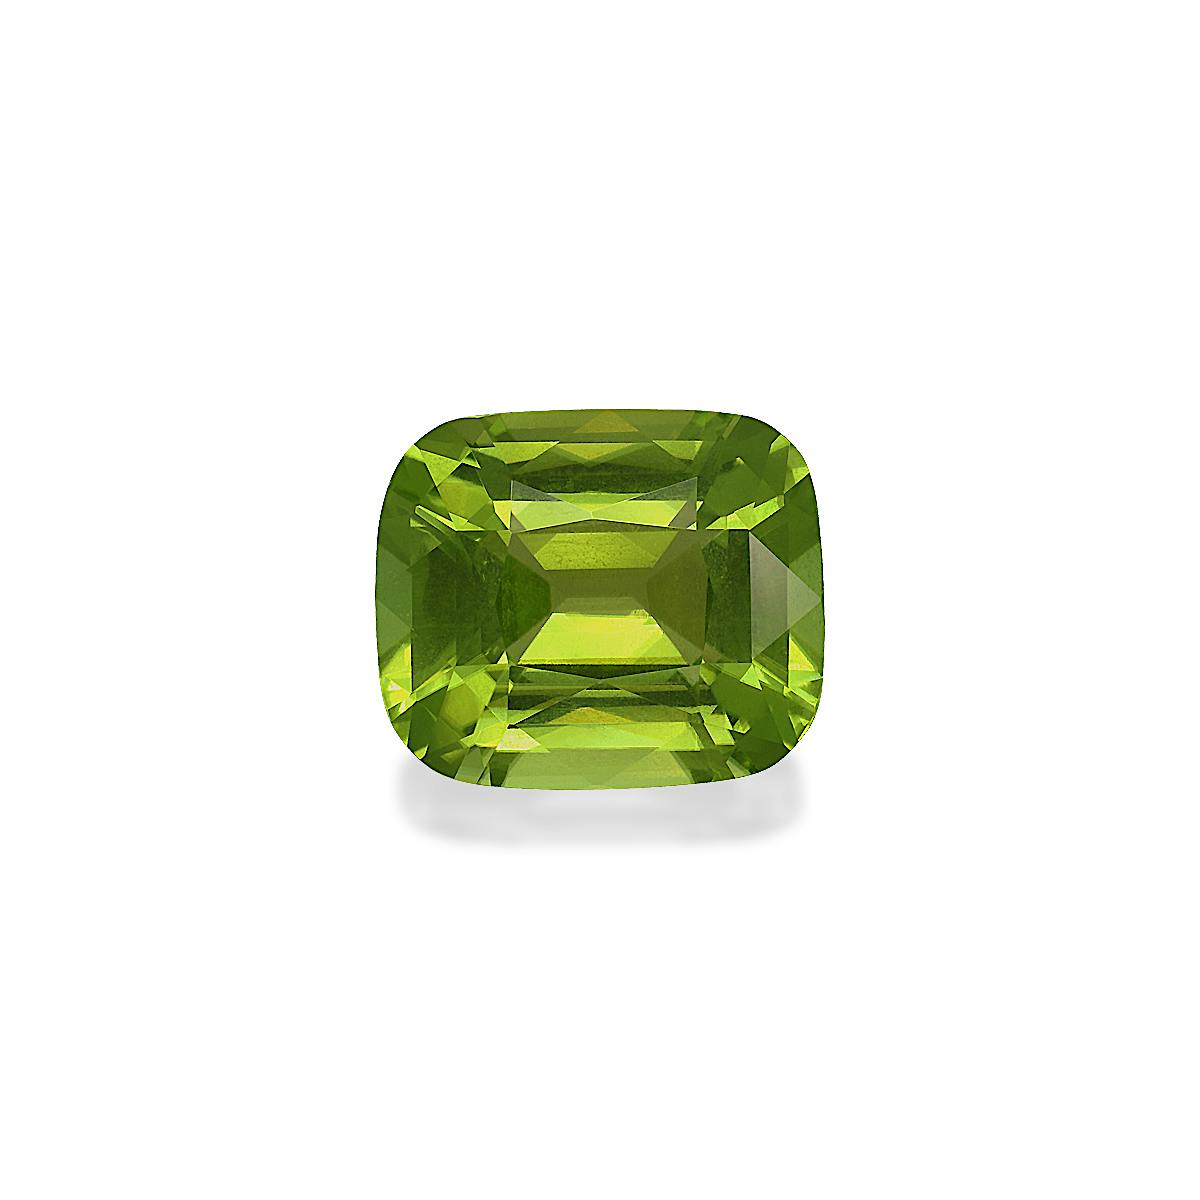 Green Peridot 5.68ct - Main Image